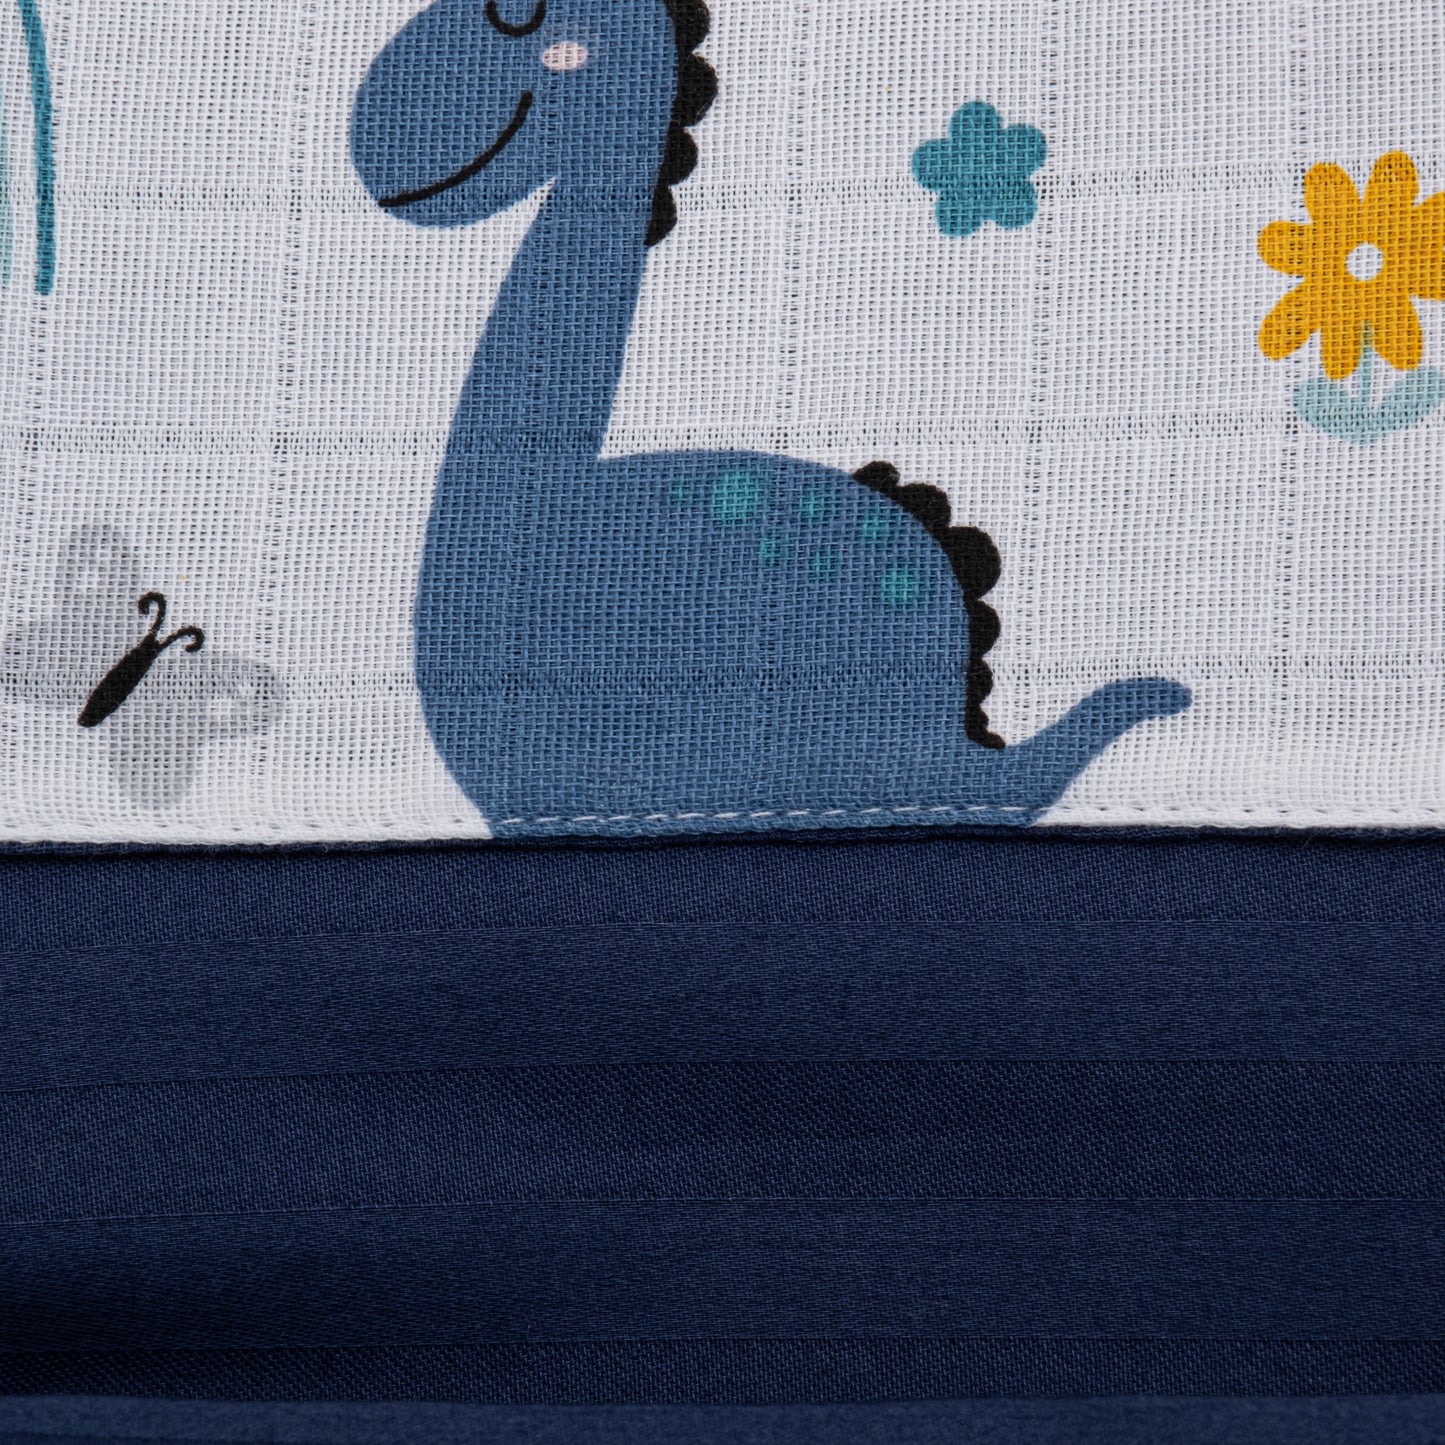 Pique Blanket - Double Side - Navy Blue Satin - Blue Dino